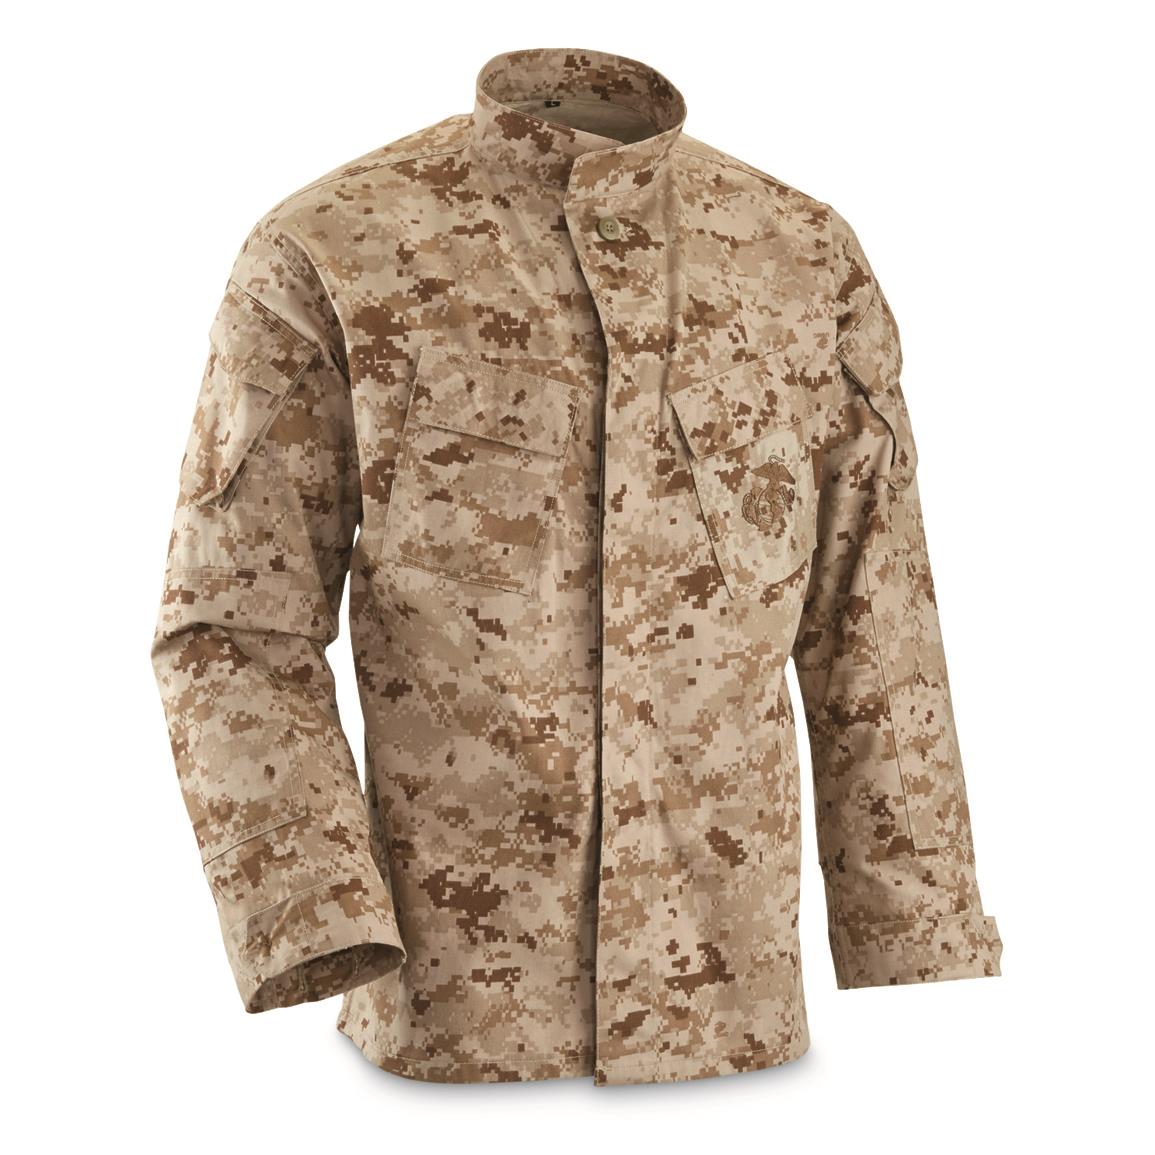 USMC Military Surplus BDU Shirt, New, Desert Digital